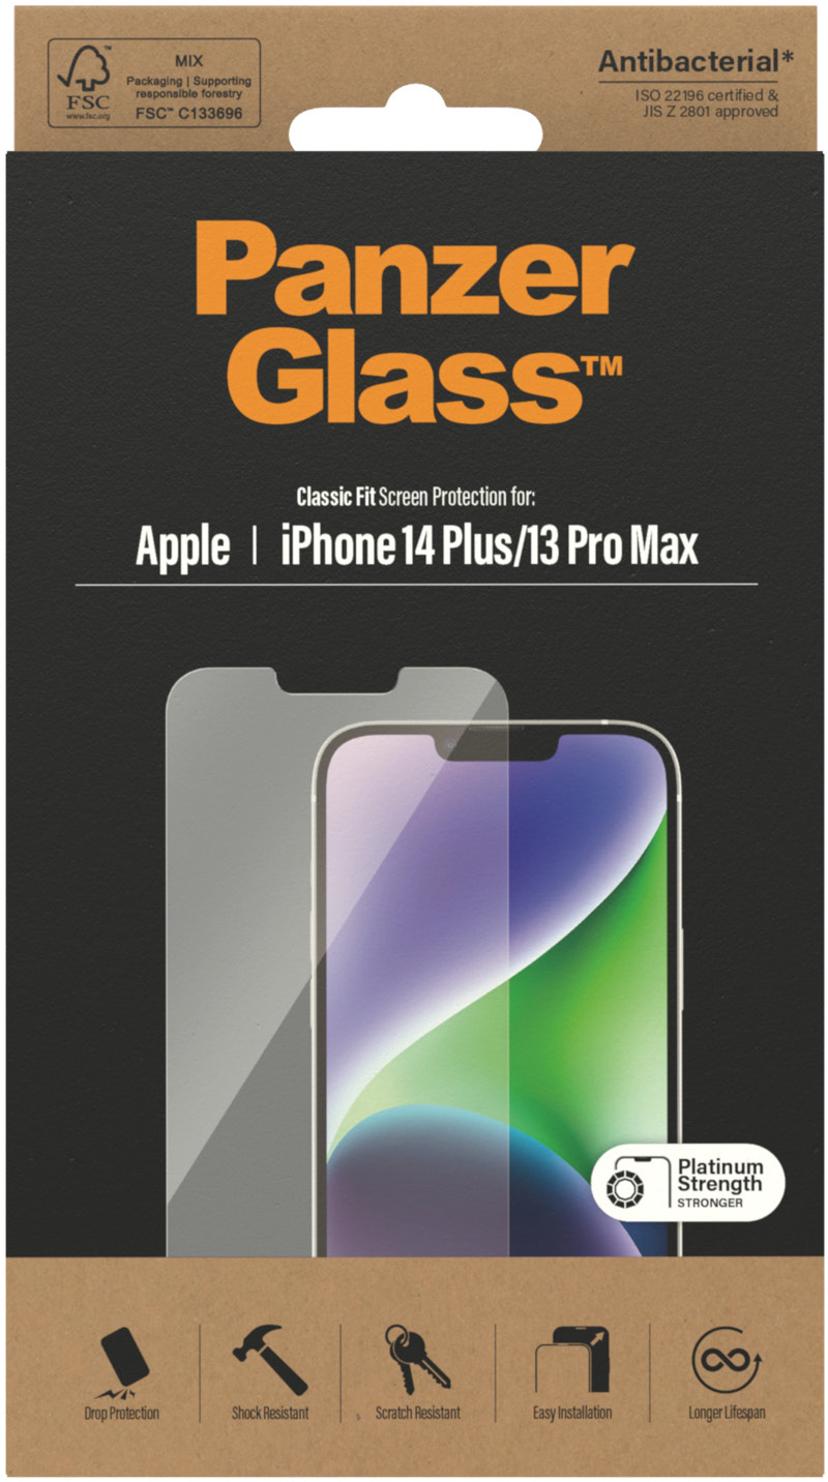 Panzerglass Classic Fit iPhone 13 Pro Max, iPhone 14 Plus